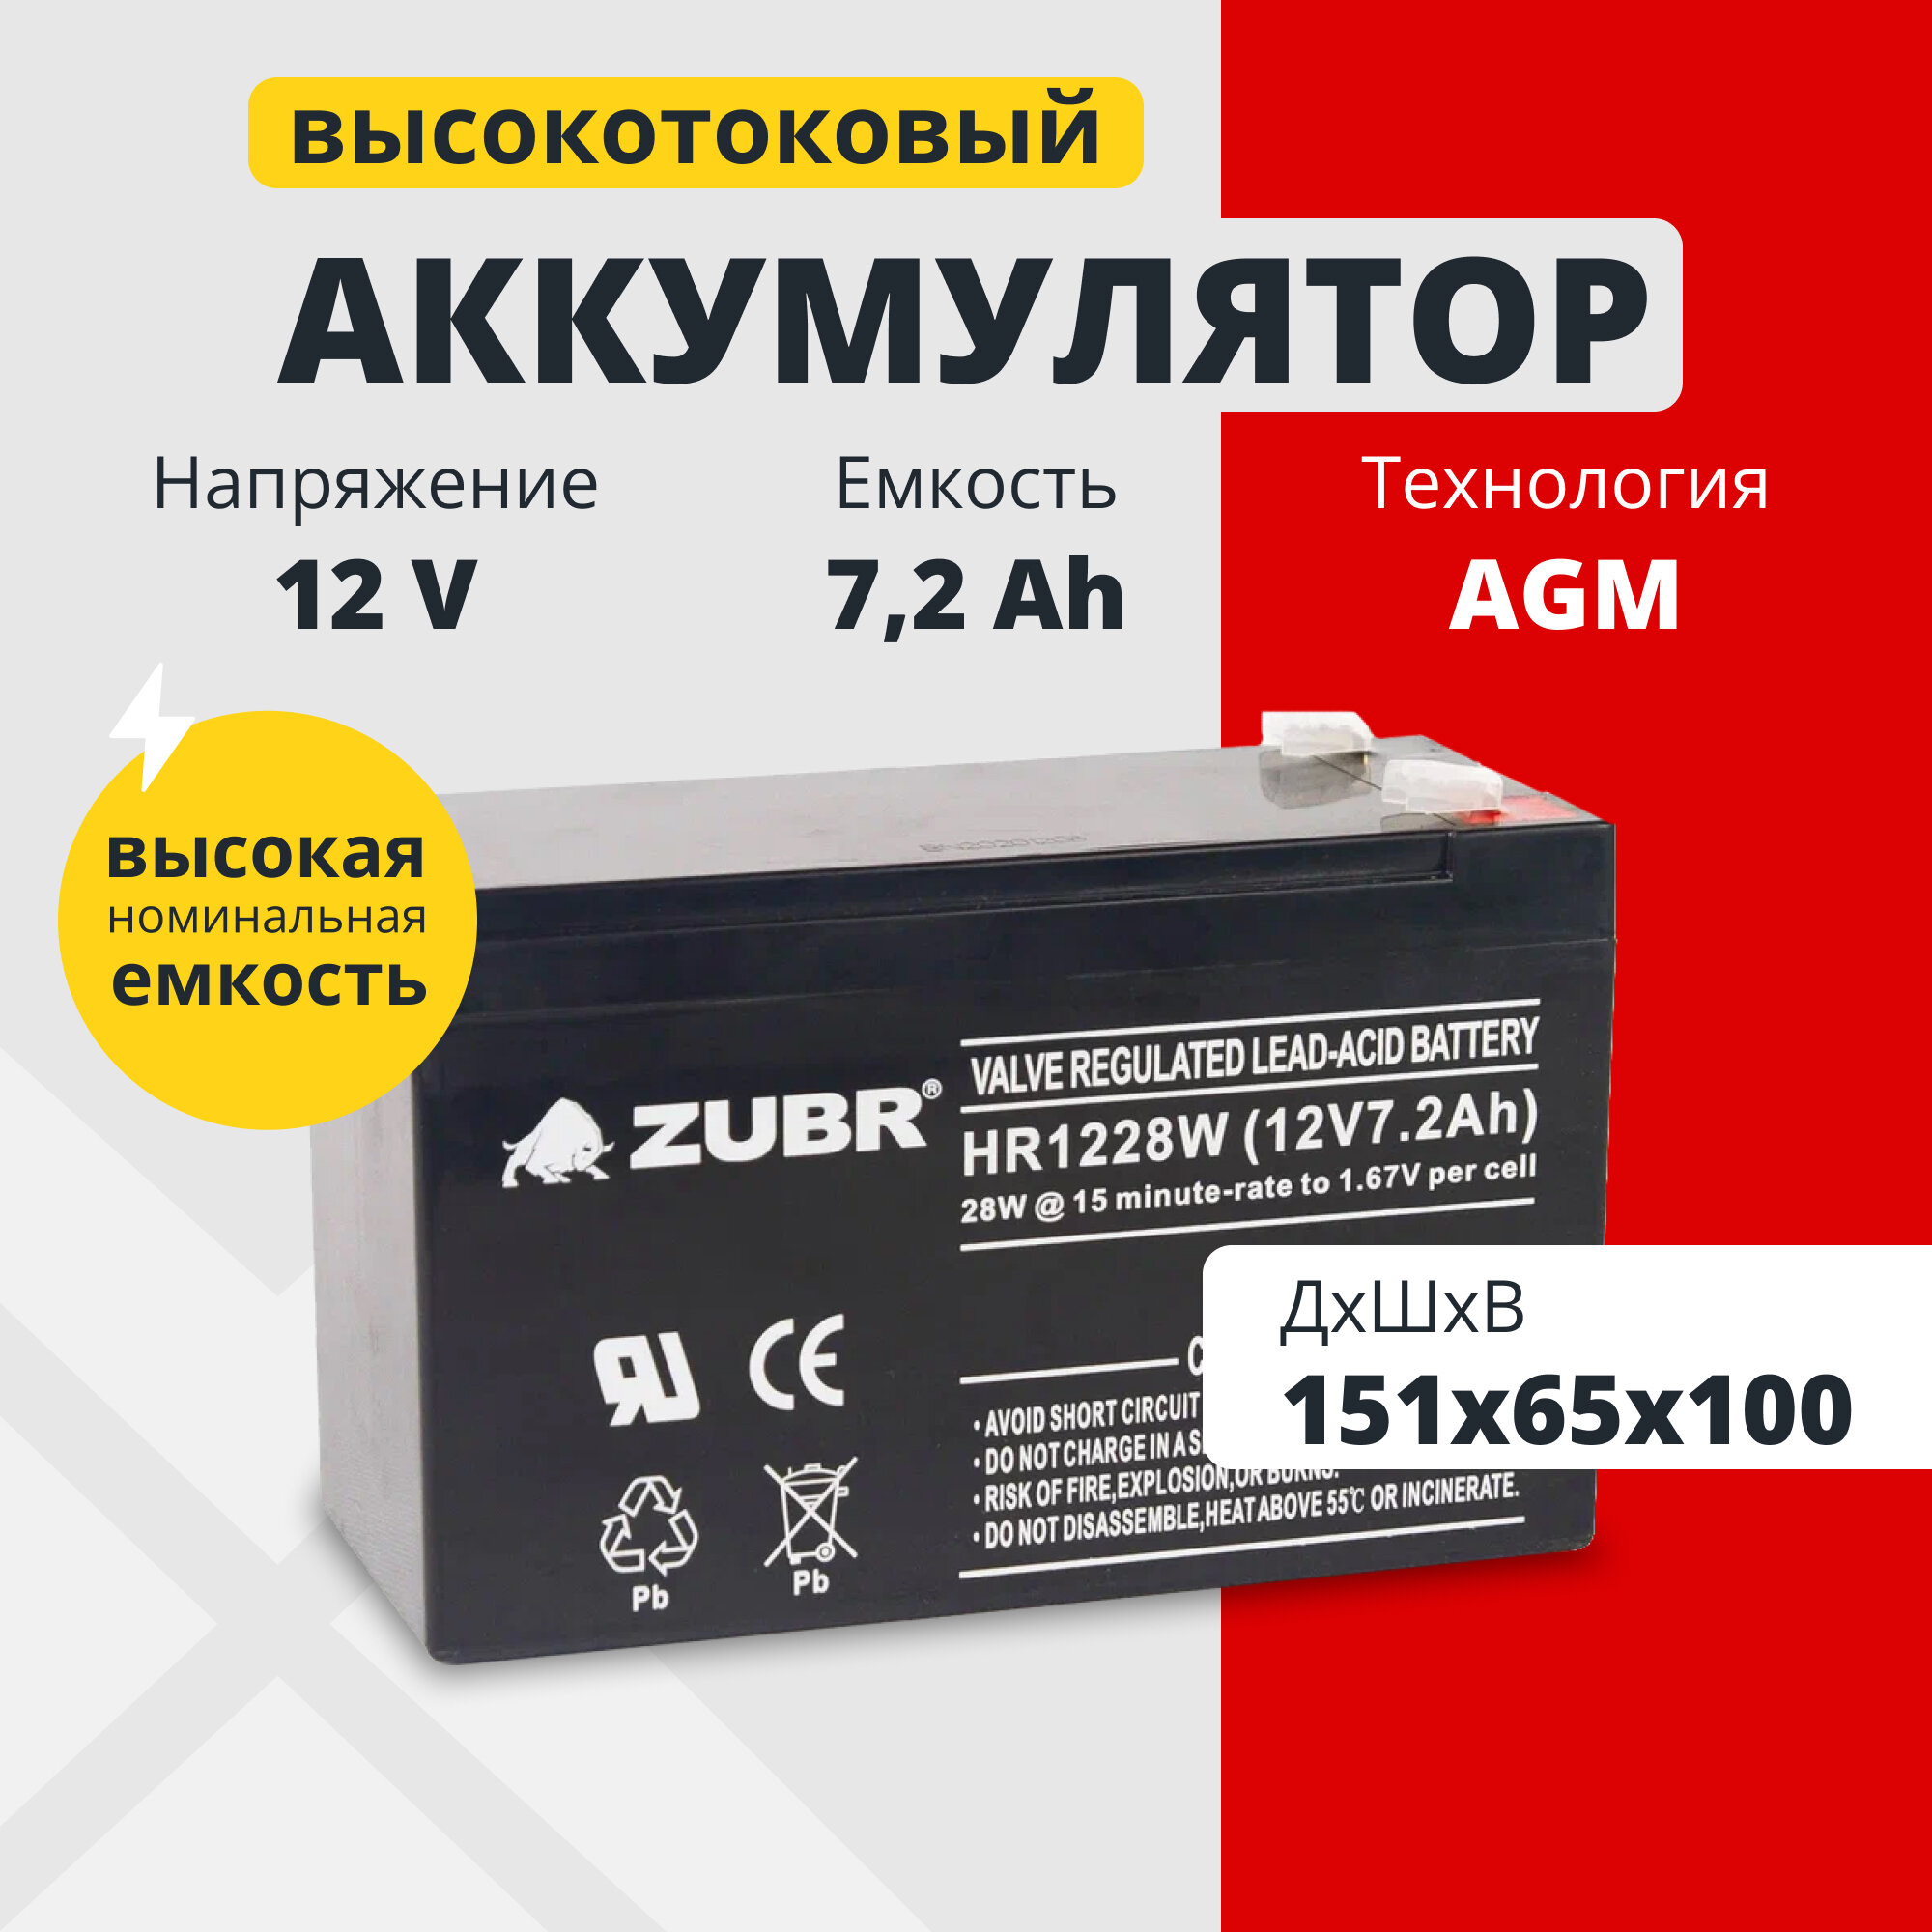 Аккумулятор для ибп 12v 7.2 Ah ZUBR AGM F2/T2 акб инкубатора, эхолота 151x65x100 мм